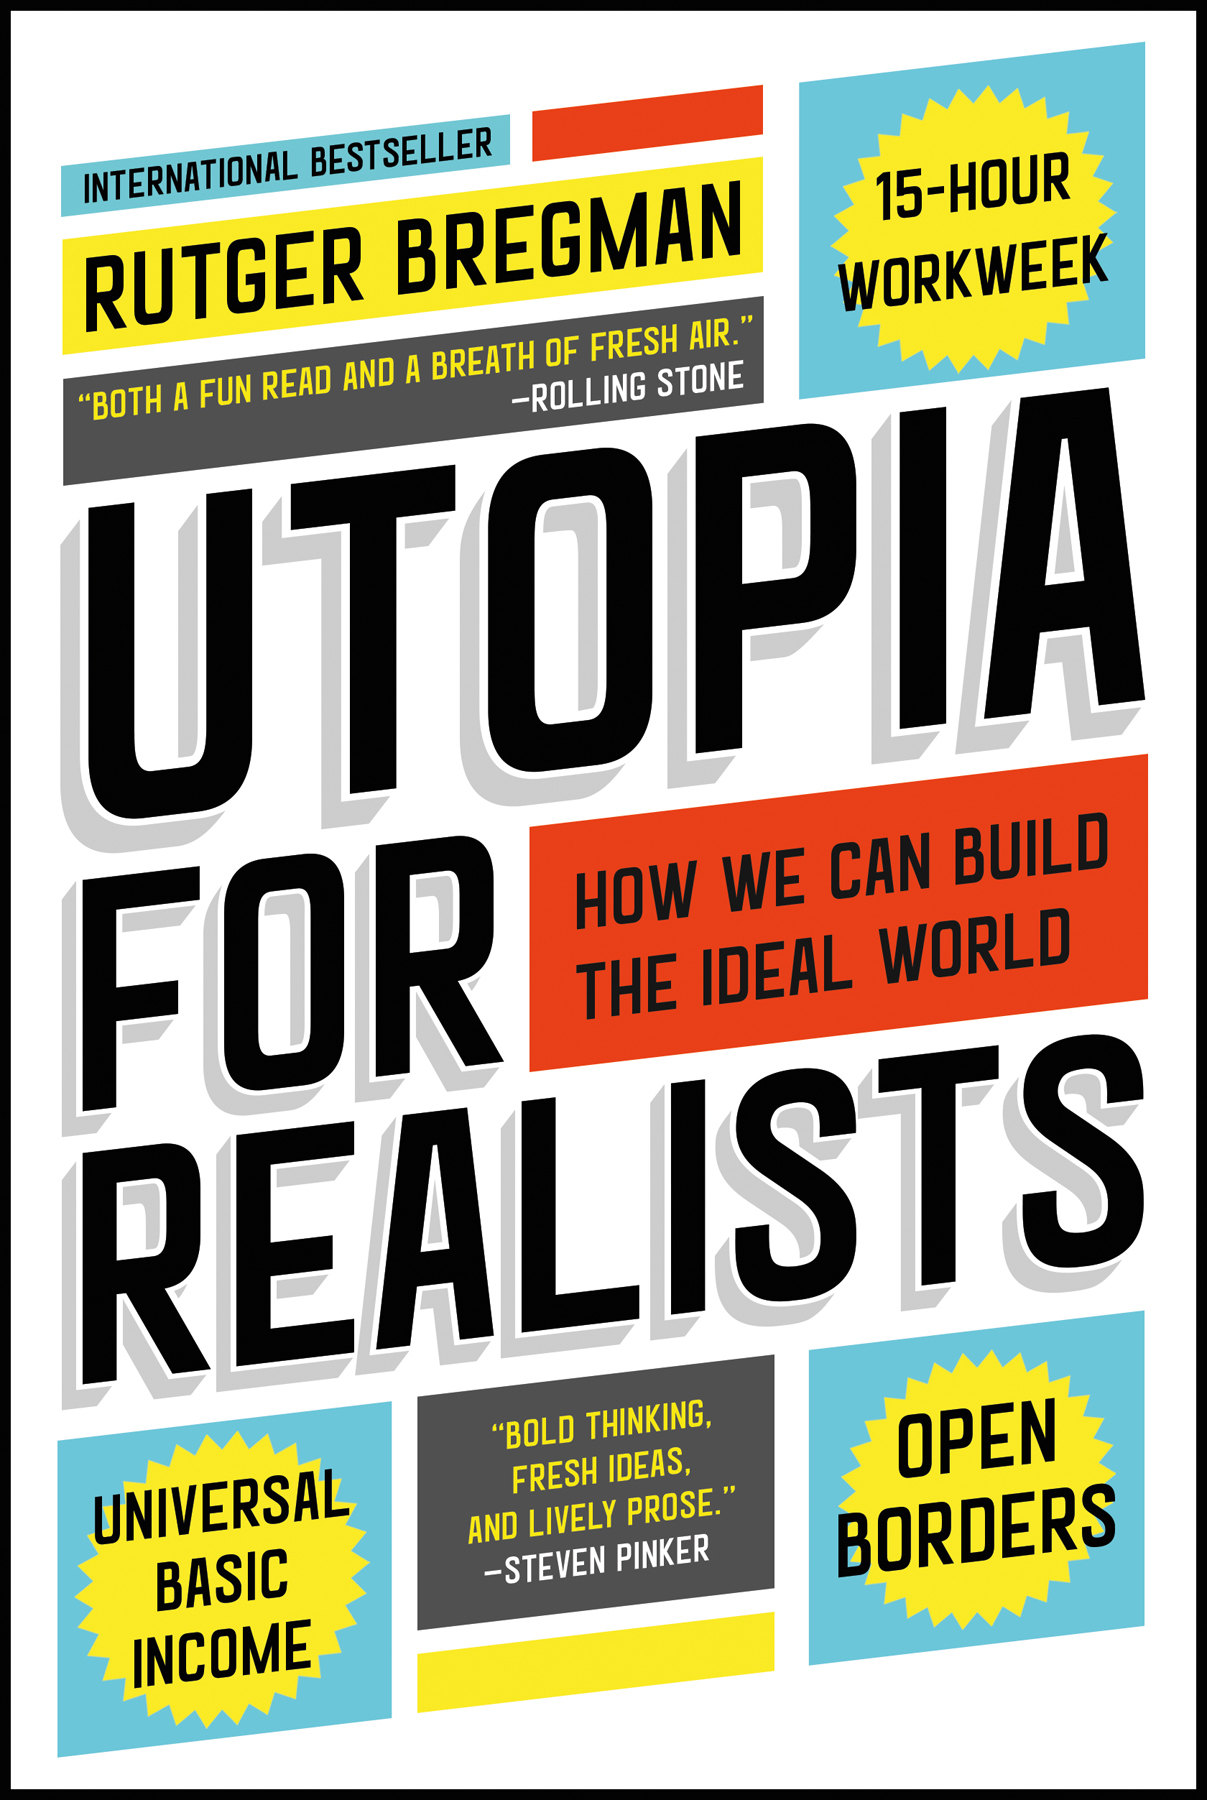 Utopia for realists (2017)